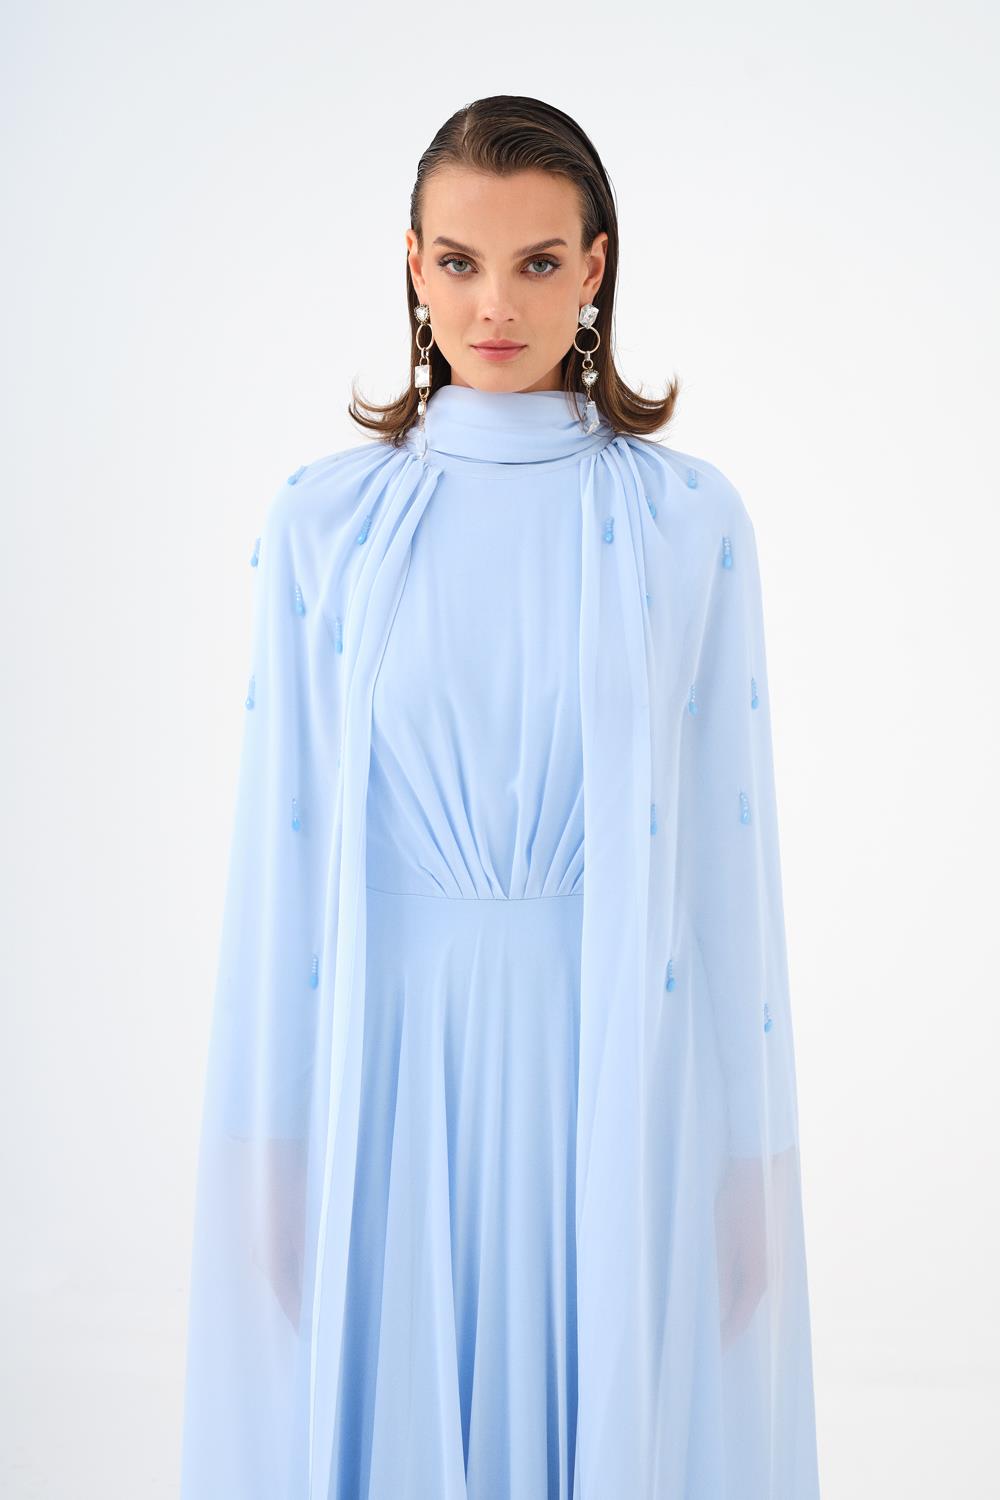 Bead Embroidered Hijab Chiffon Long Evening Dress